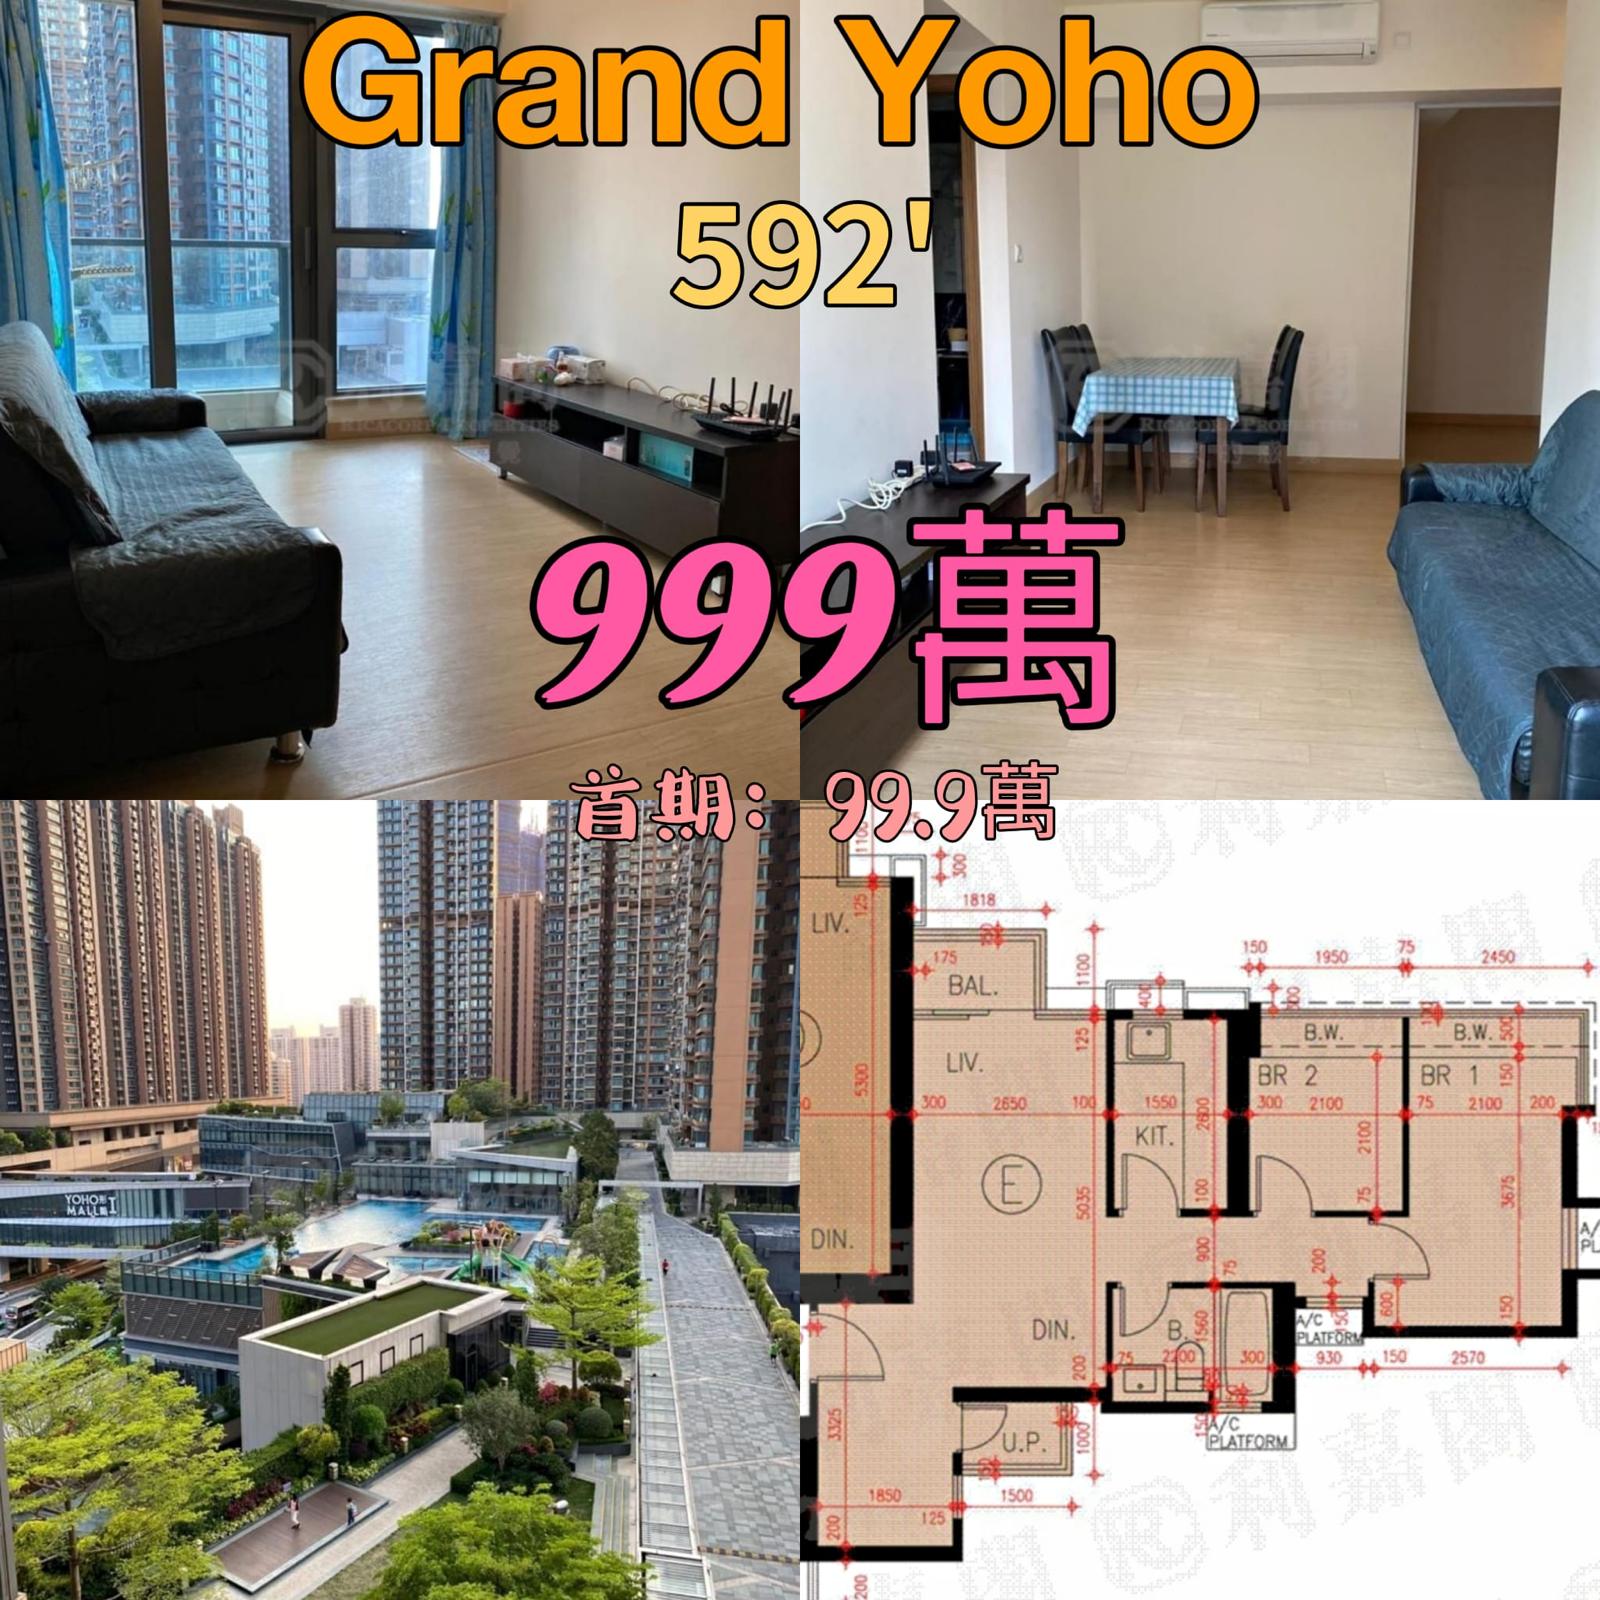 $99萬首期 💖💖 GRAND YOHO 最平3房 💖💖 - 元朗屋網 28YuenLong.com